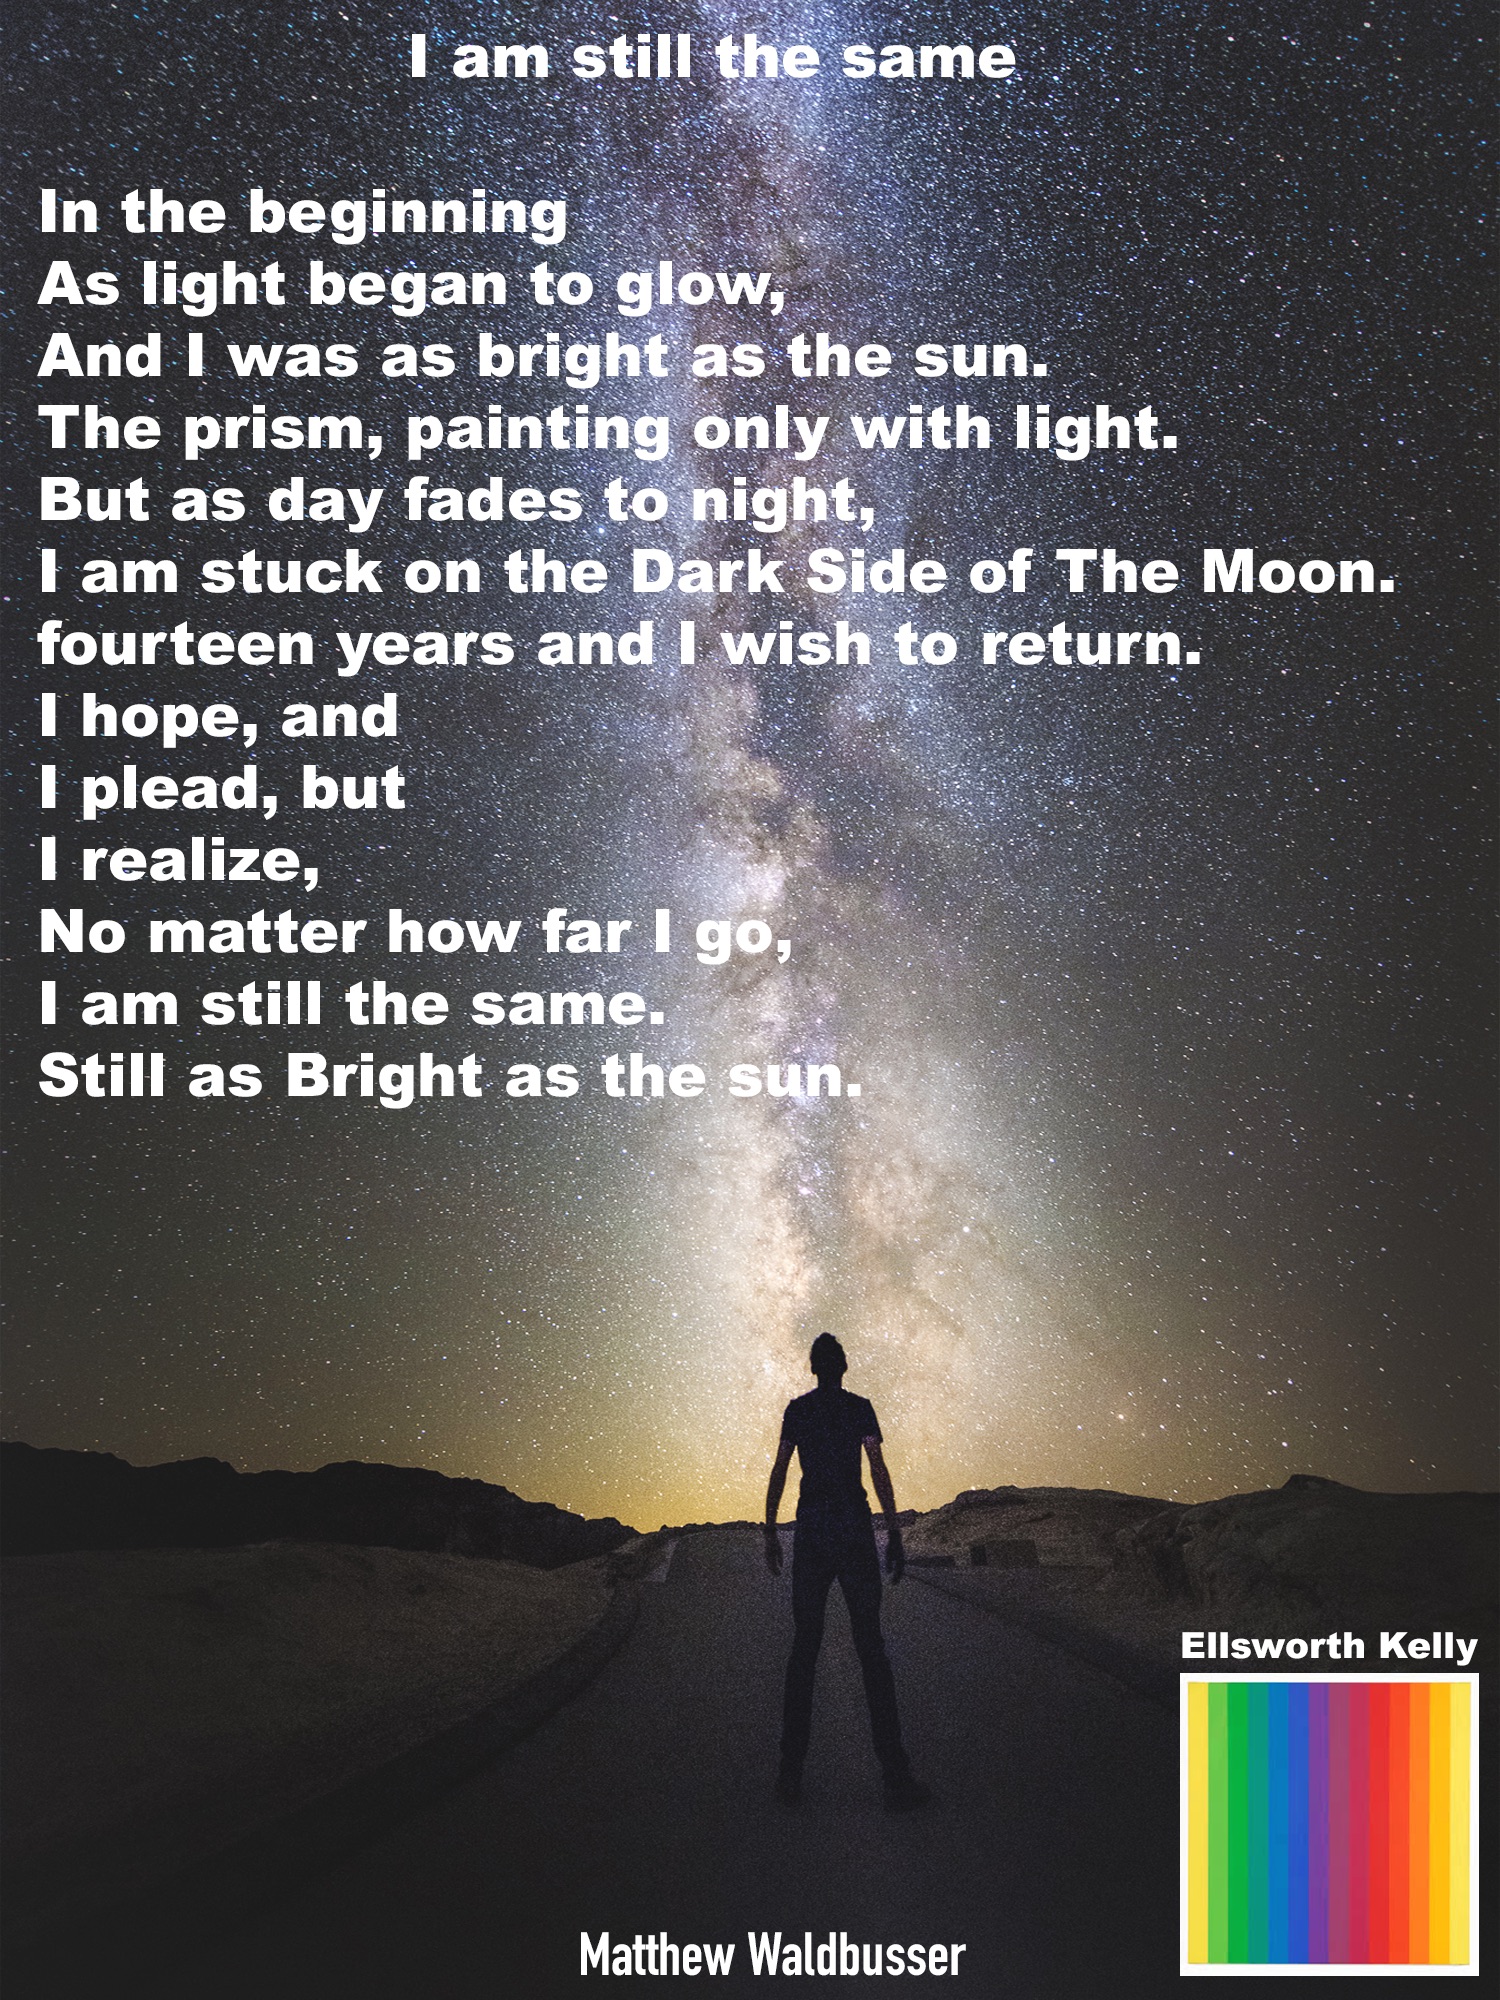 Poem by MatthewW